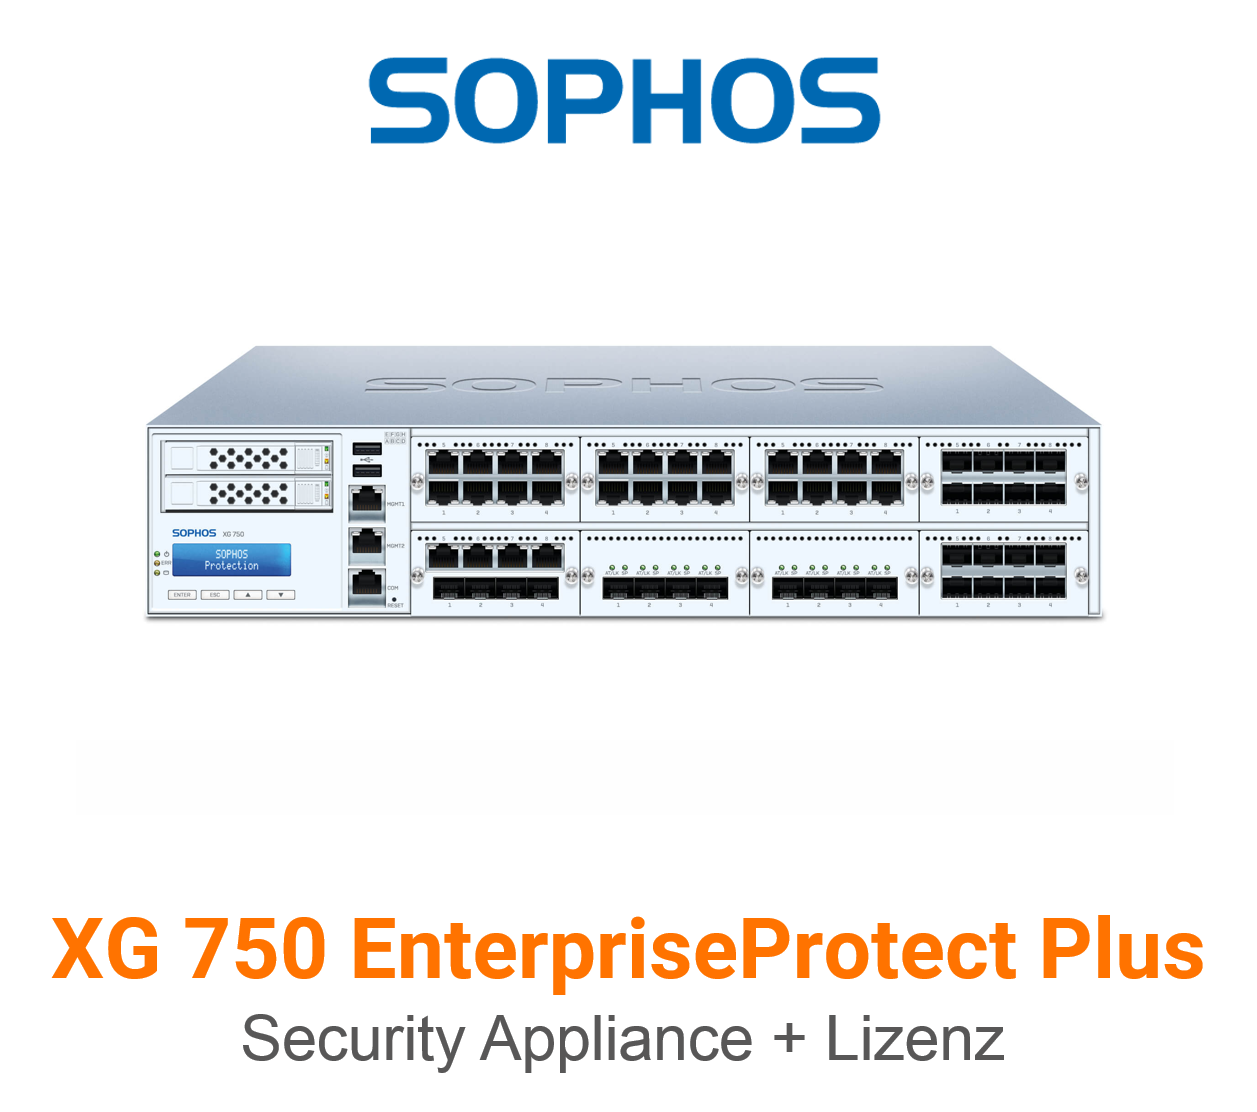 Sophos XG 750 EnterpriseProtect Plus Bundle (Hardware + Lizenz)